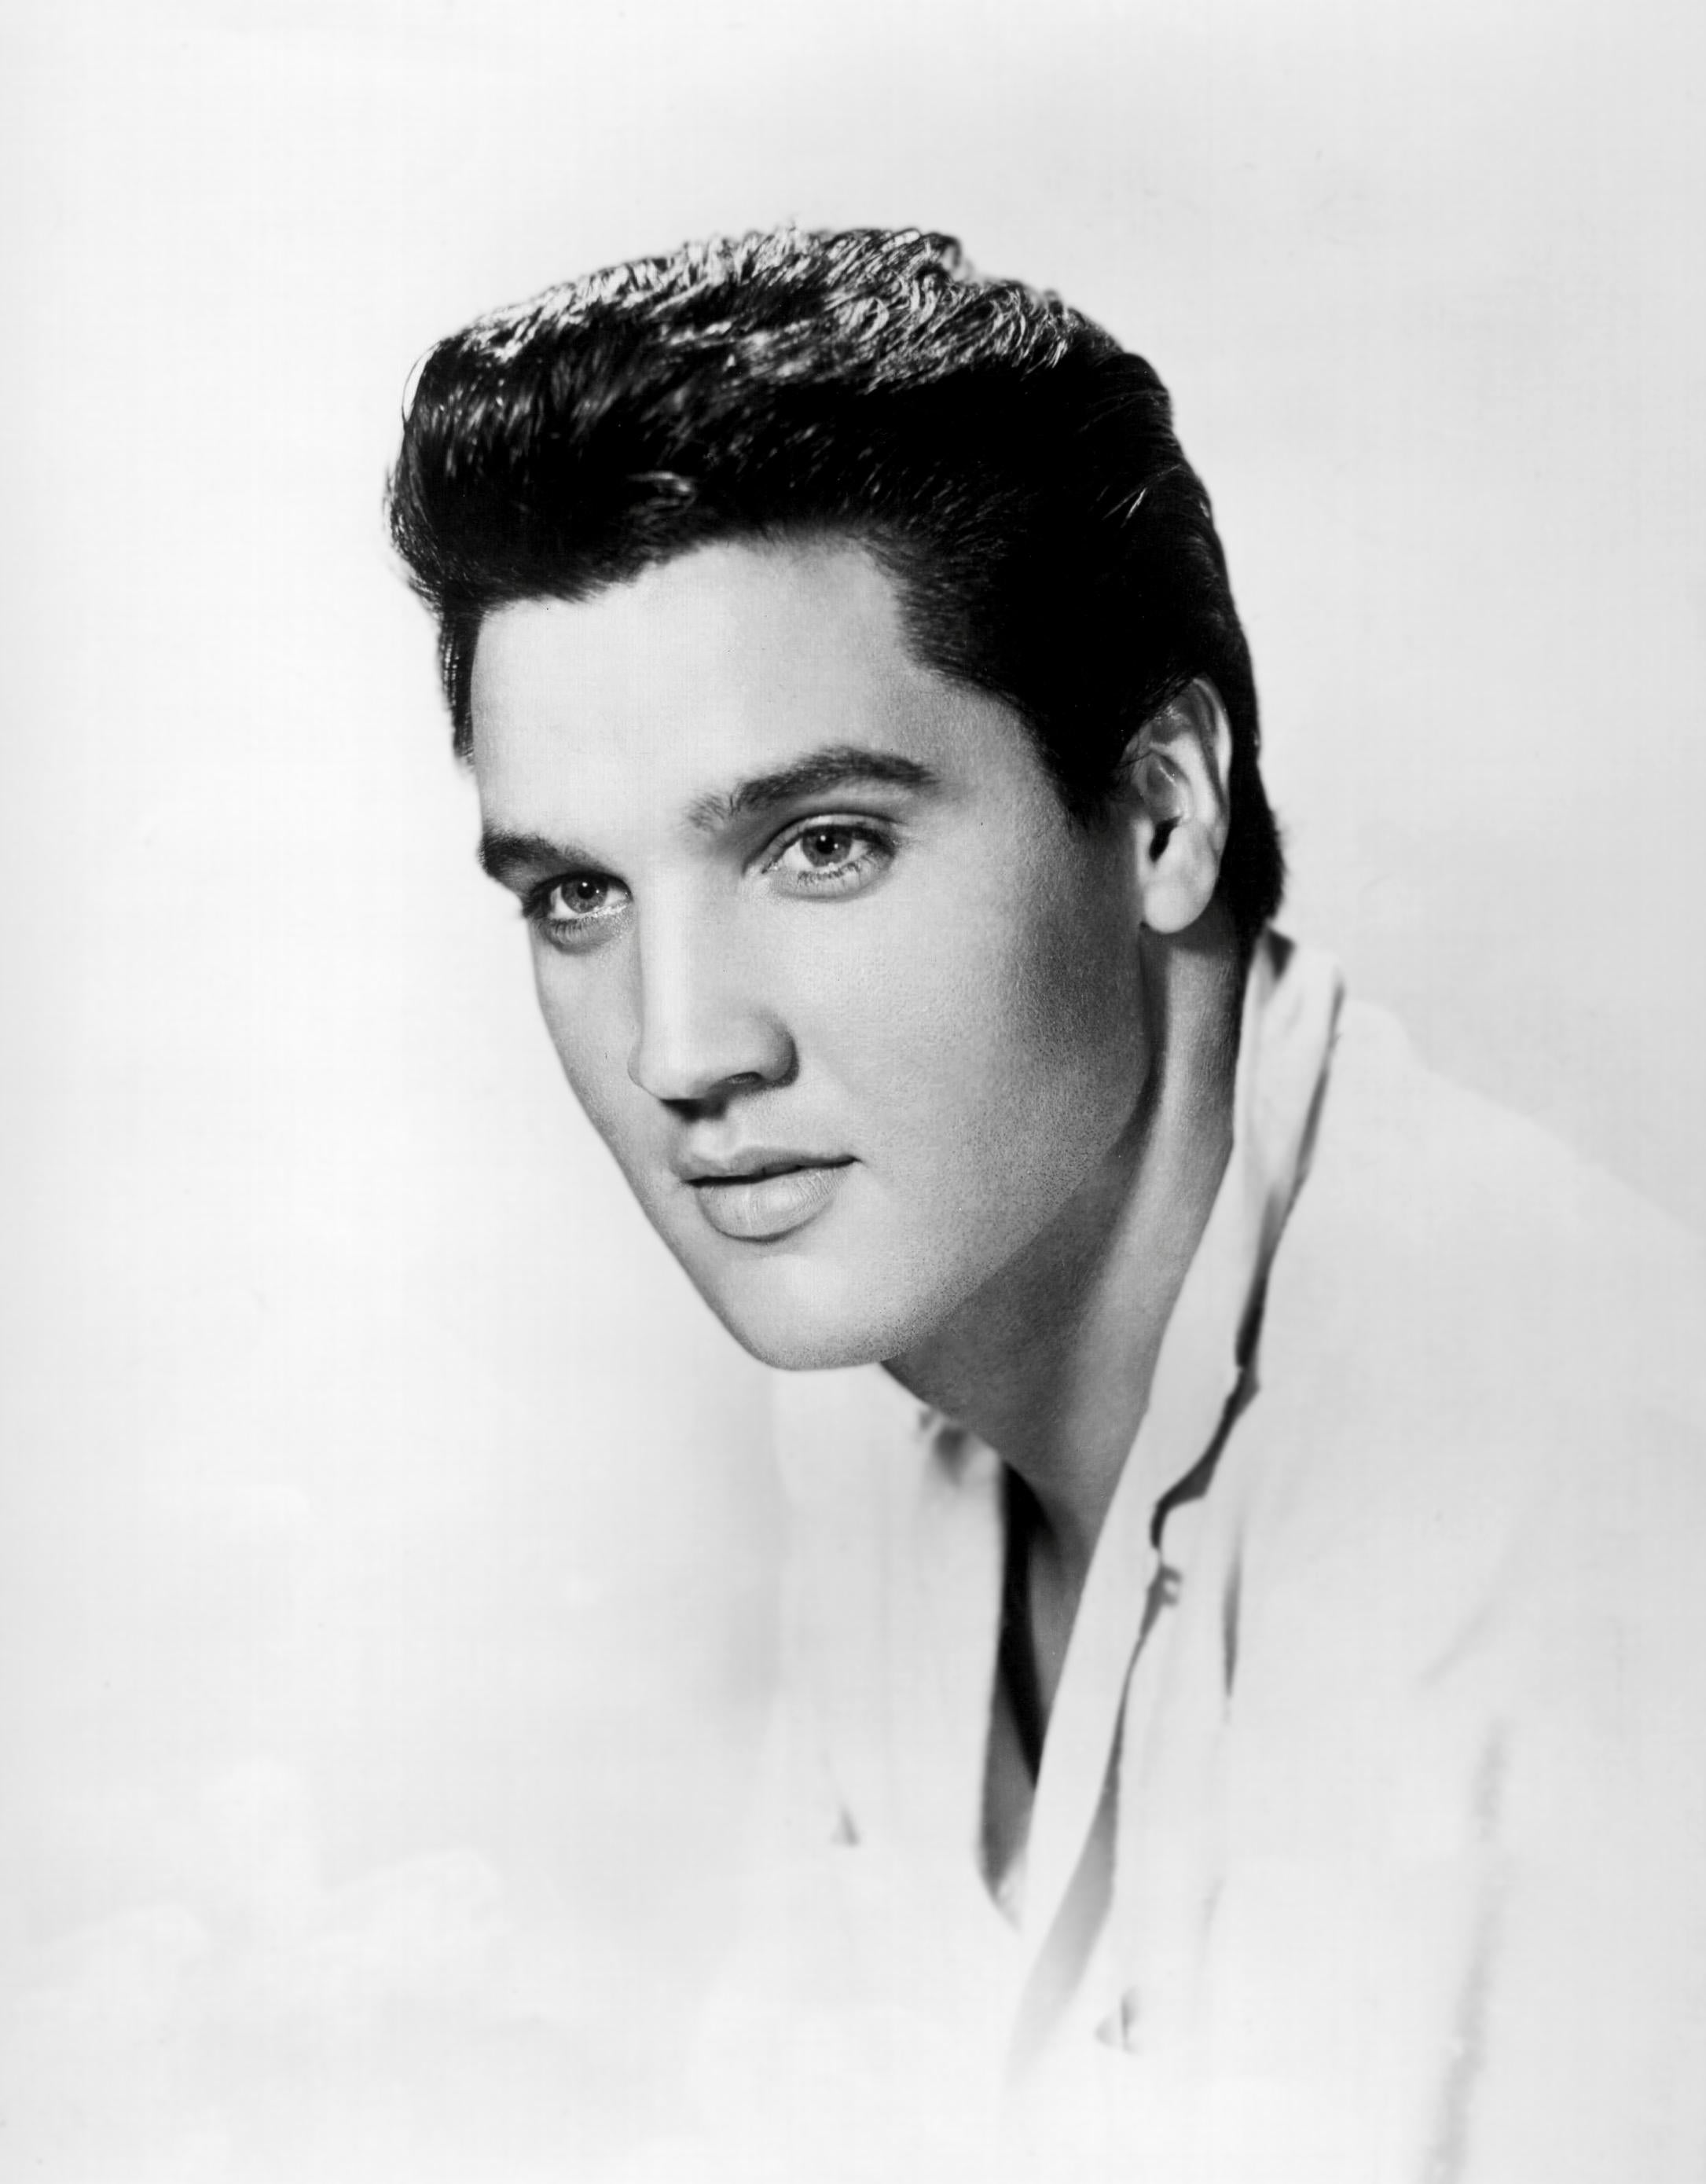 Unknown Black and White Photograph - Elvis Presley: Handsome Star on White Globe Photos Fine Art Print